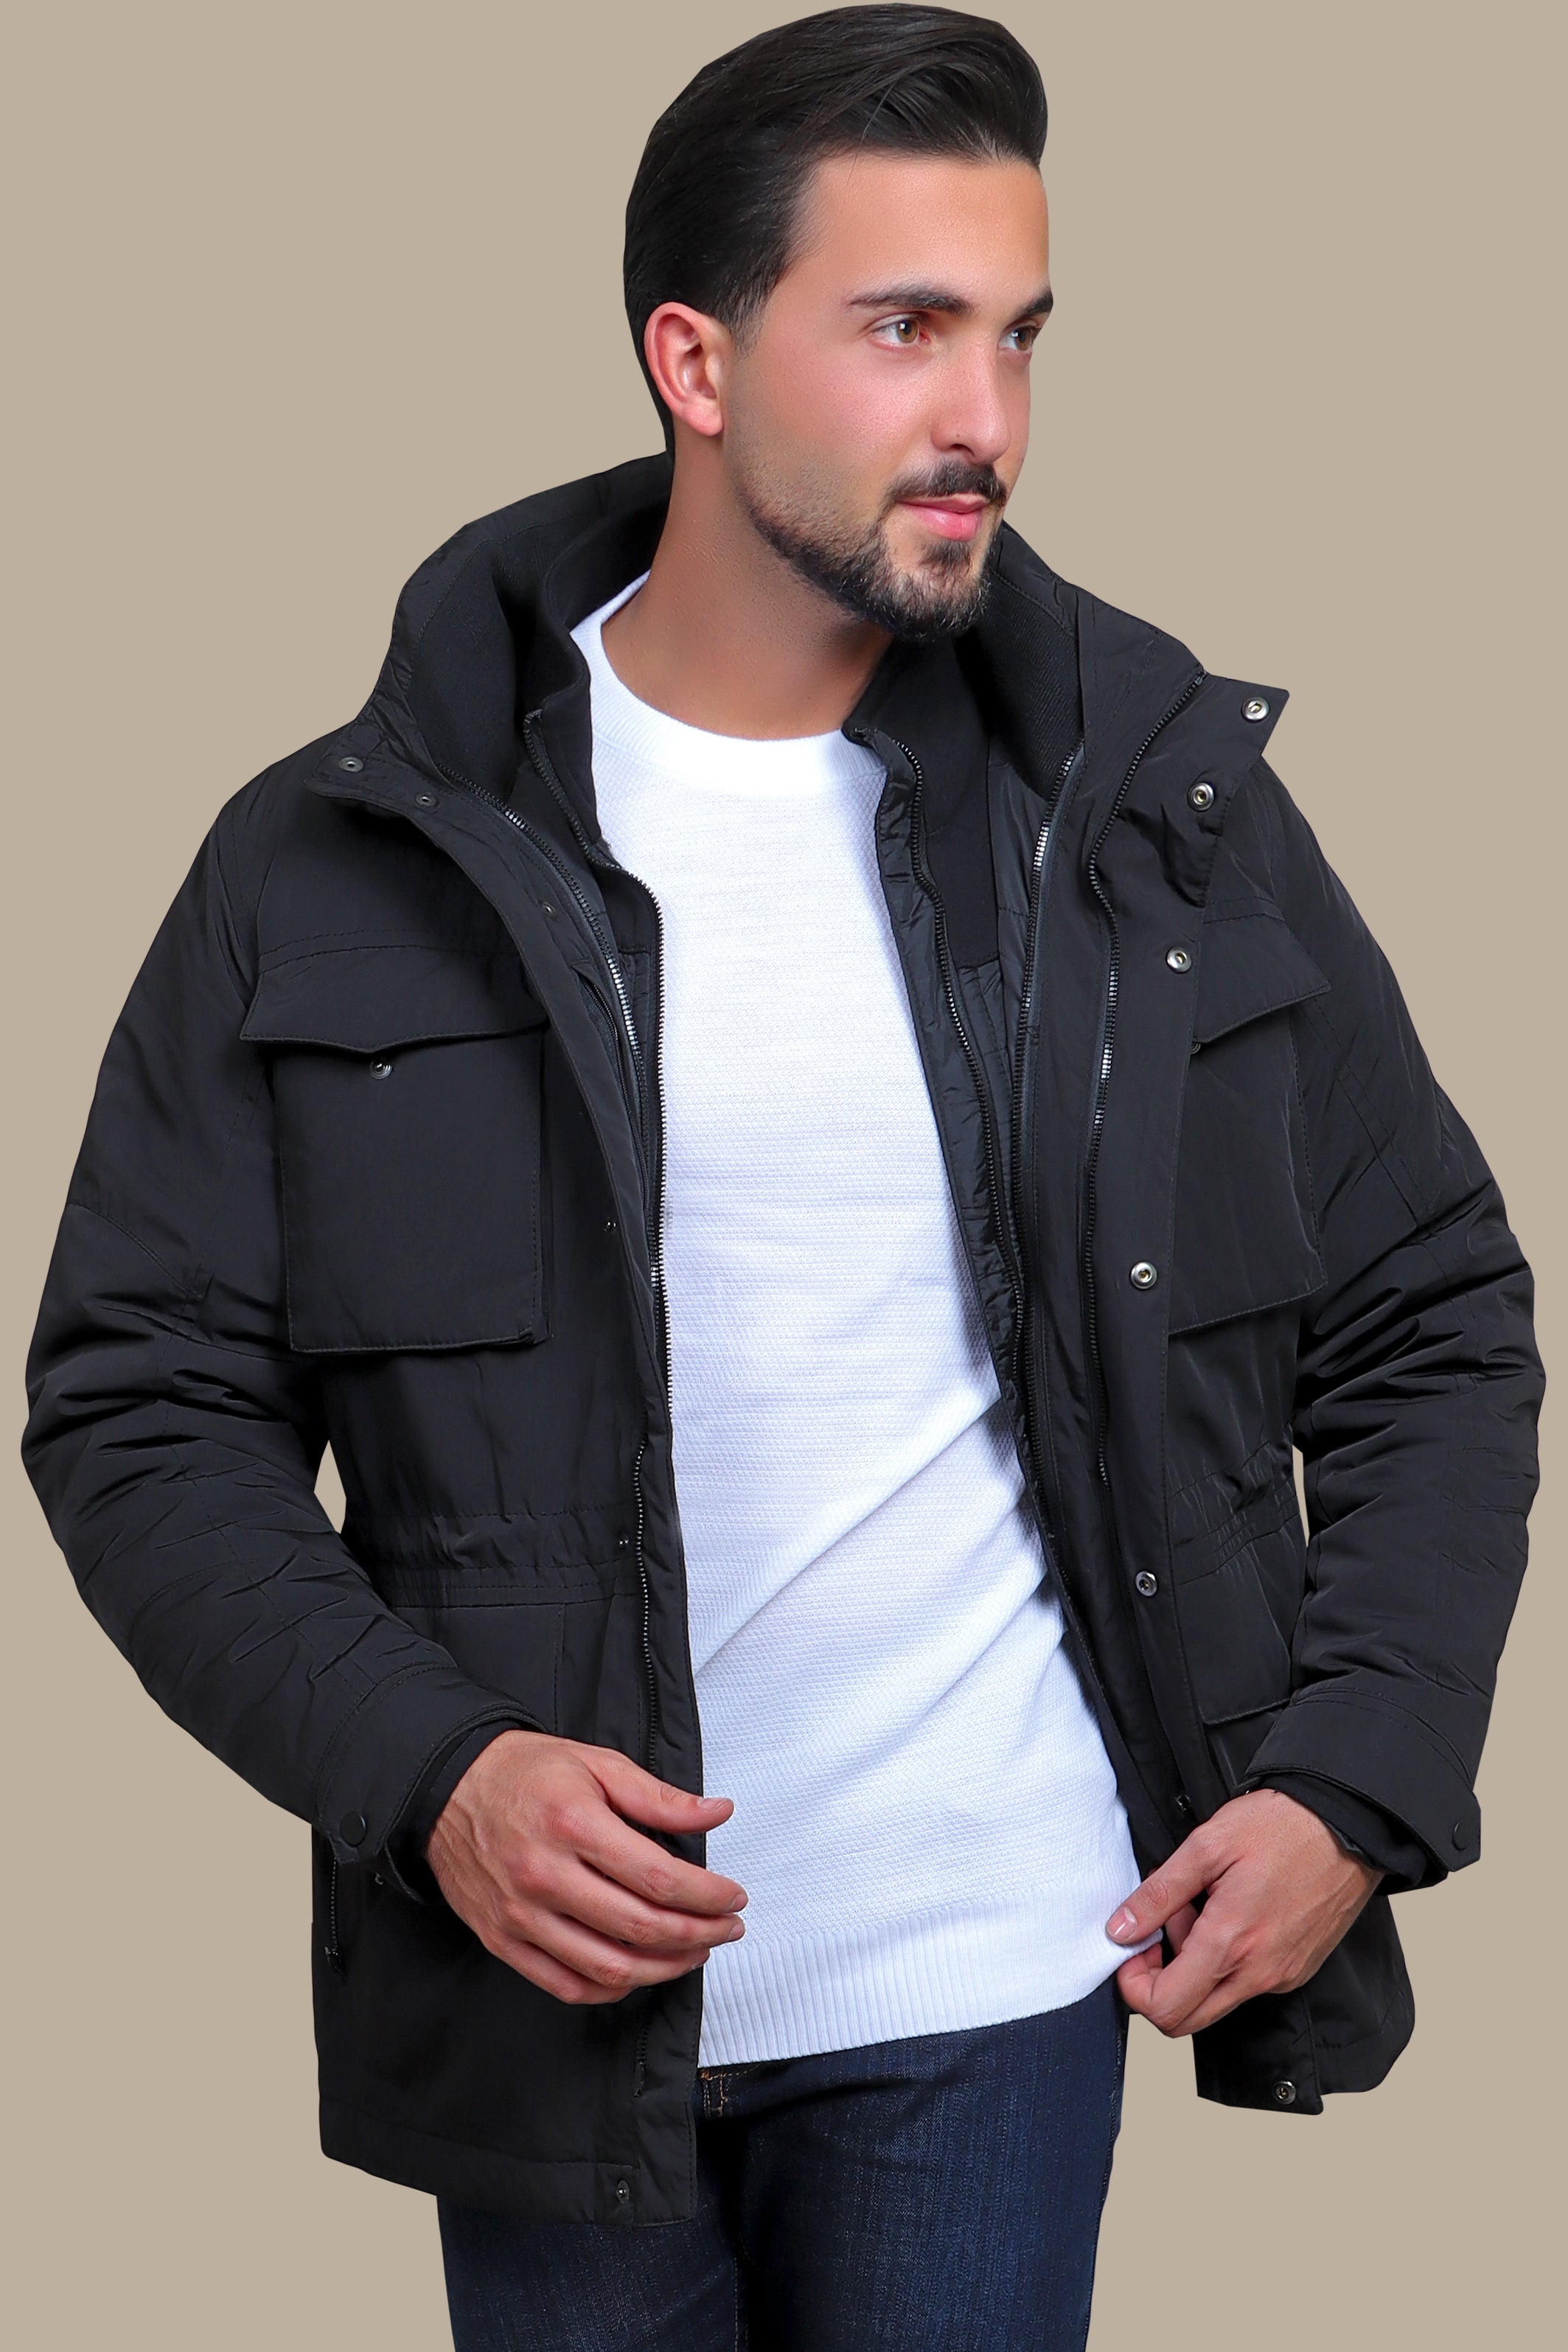 Adaptable Allure: Black Detachable Windbreaker Jacket